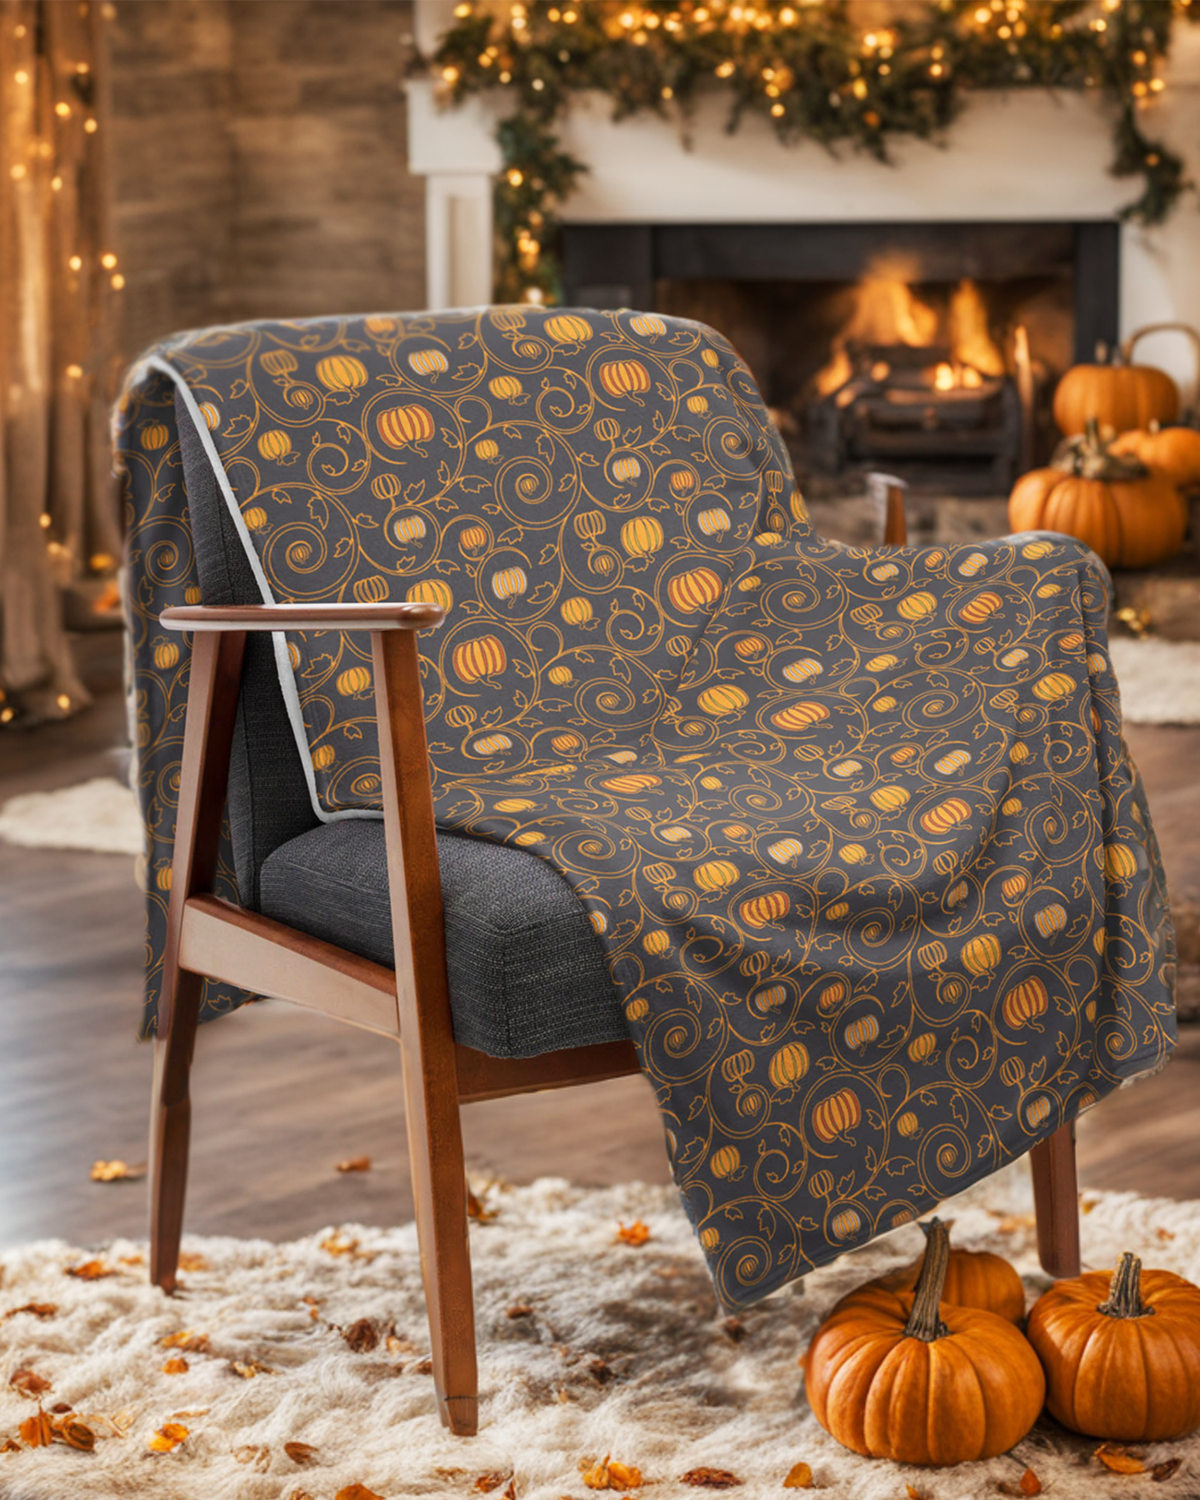 Pumpkin Patch Bonfire Blanket